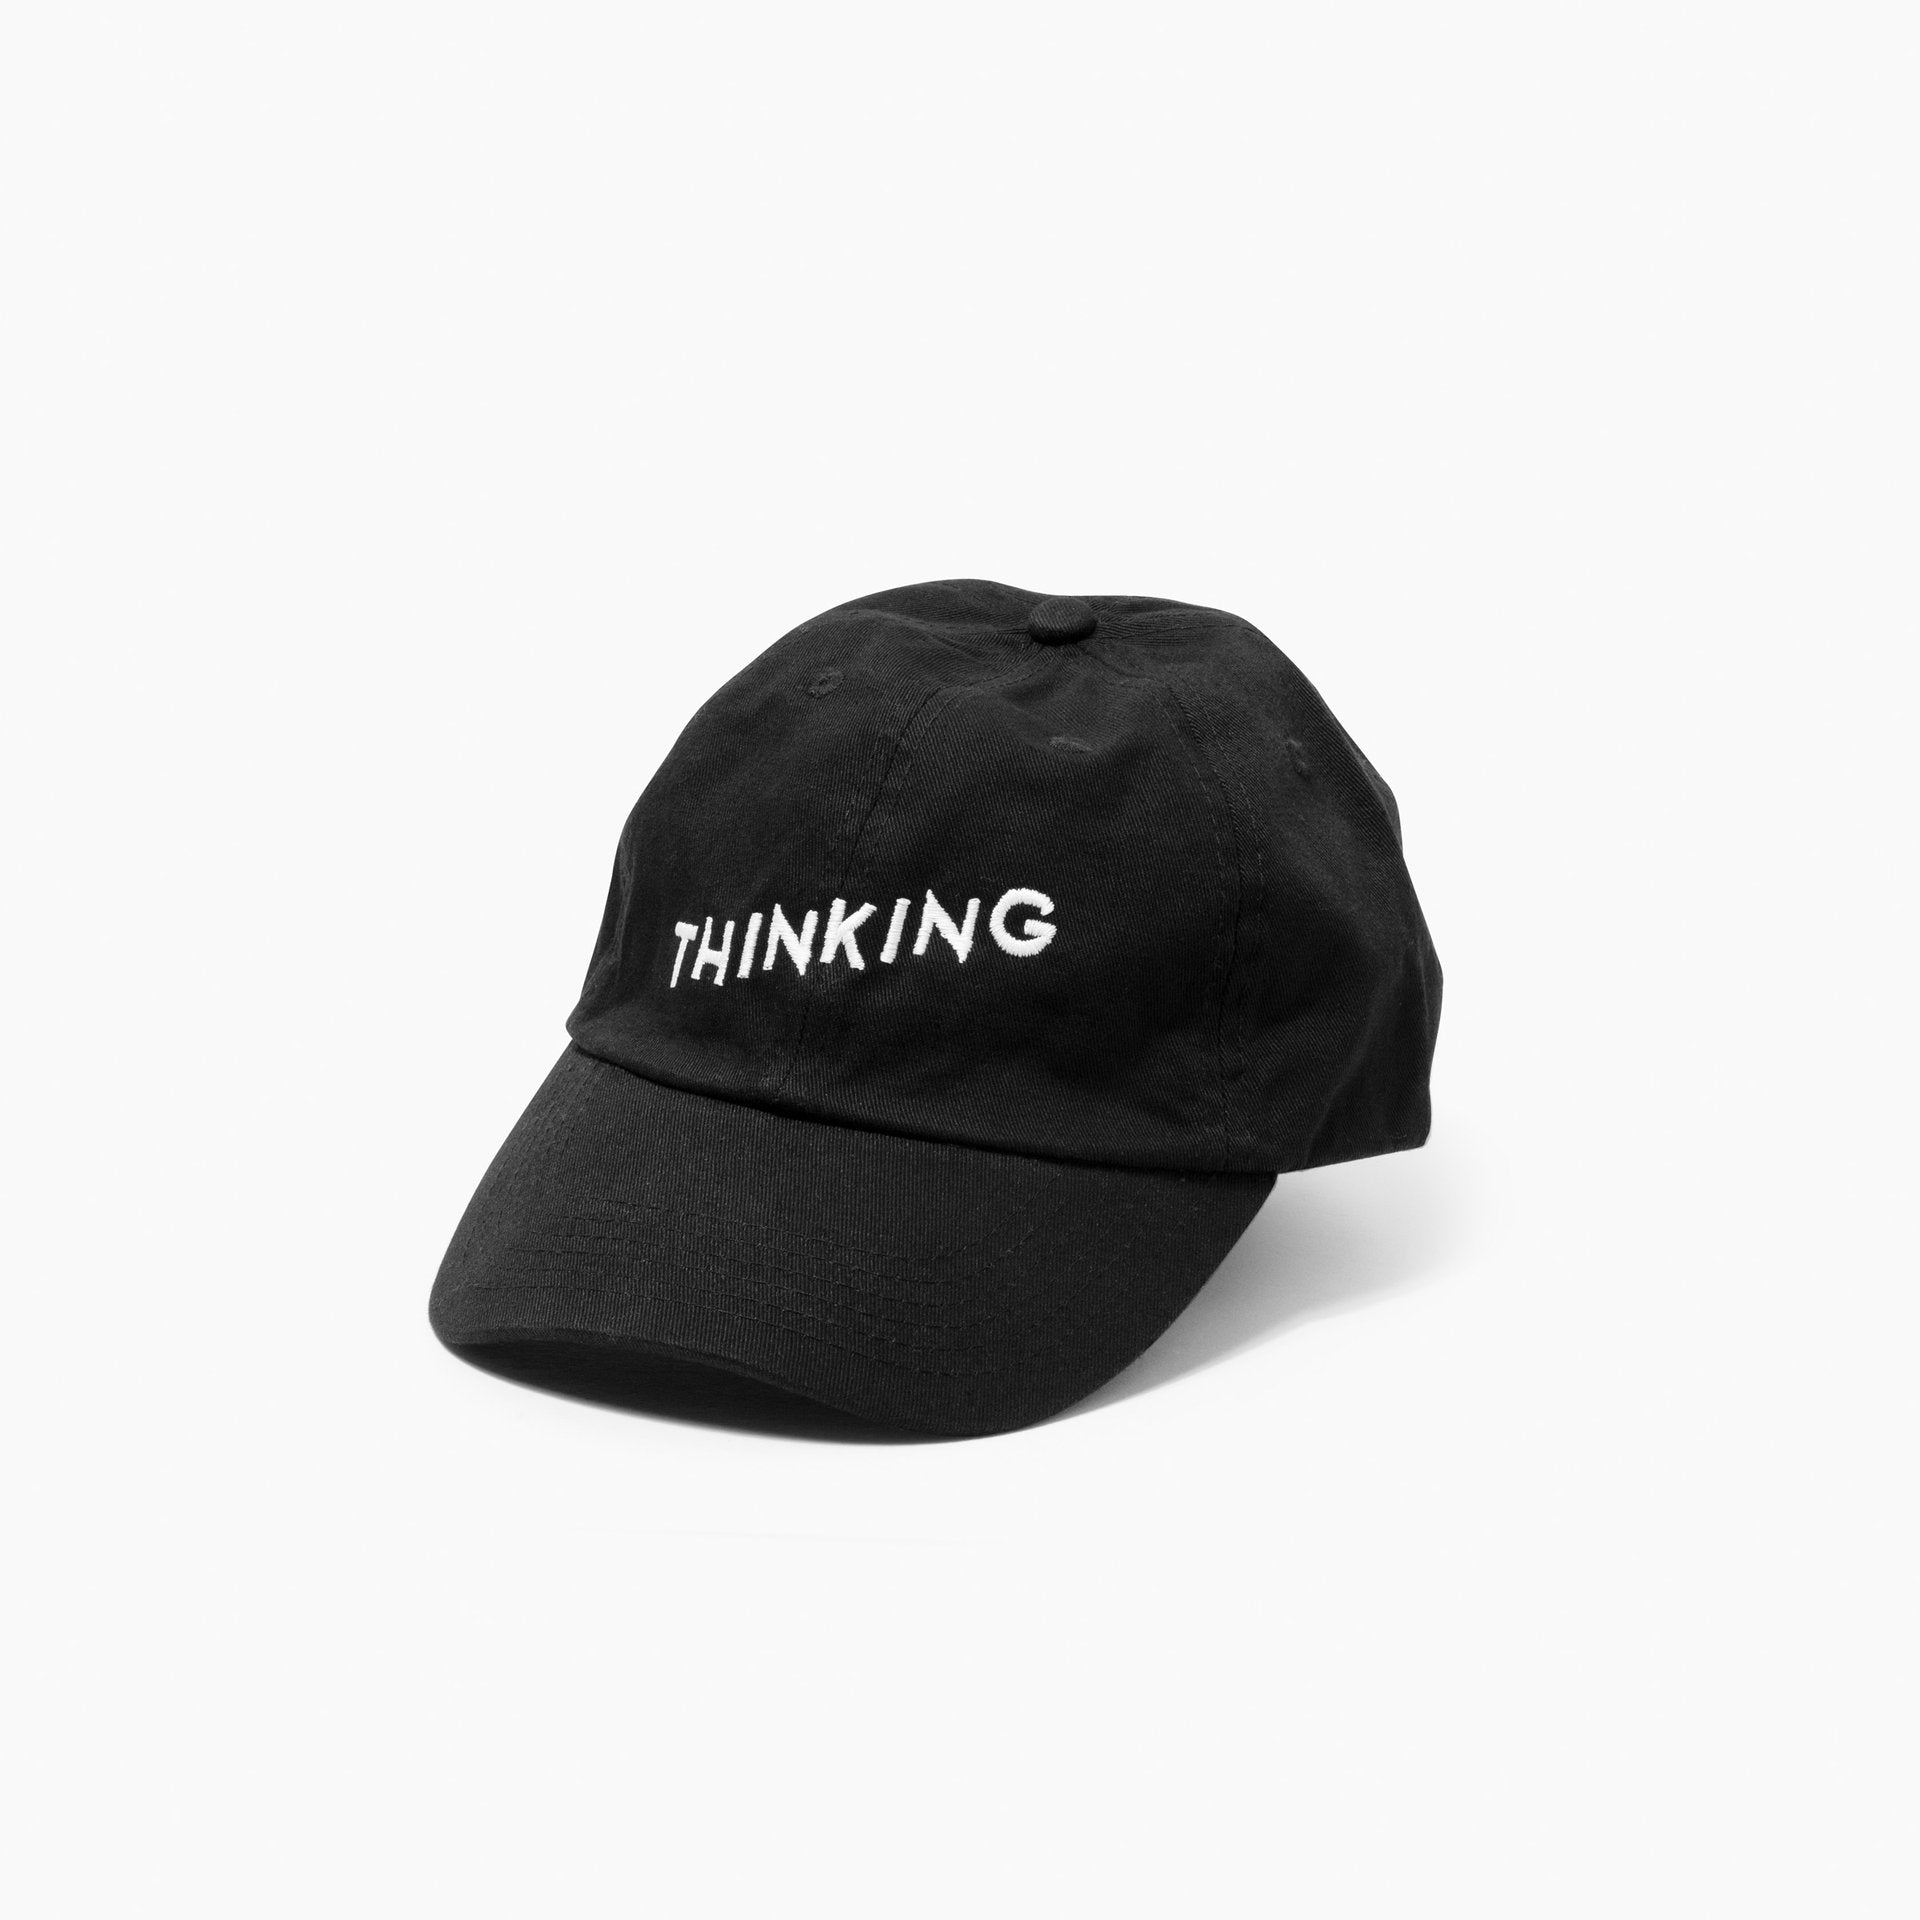 Poketo Thinking Cap in Black